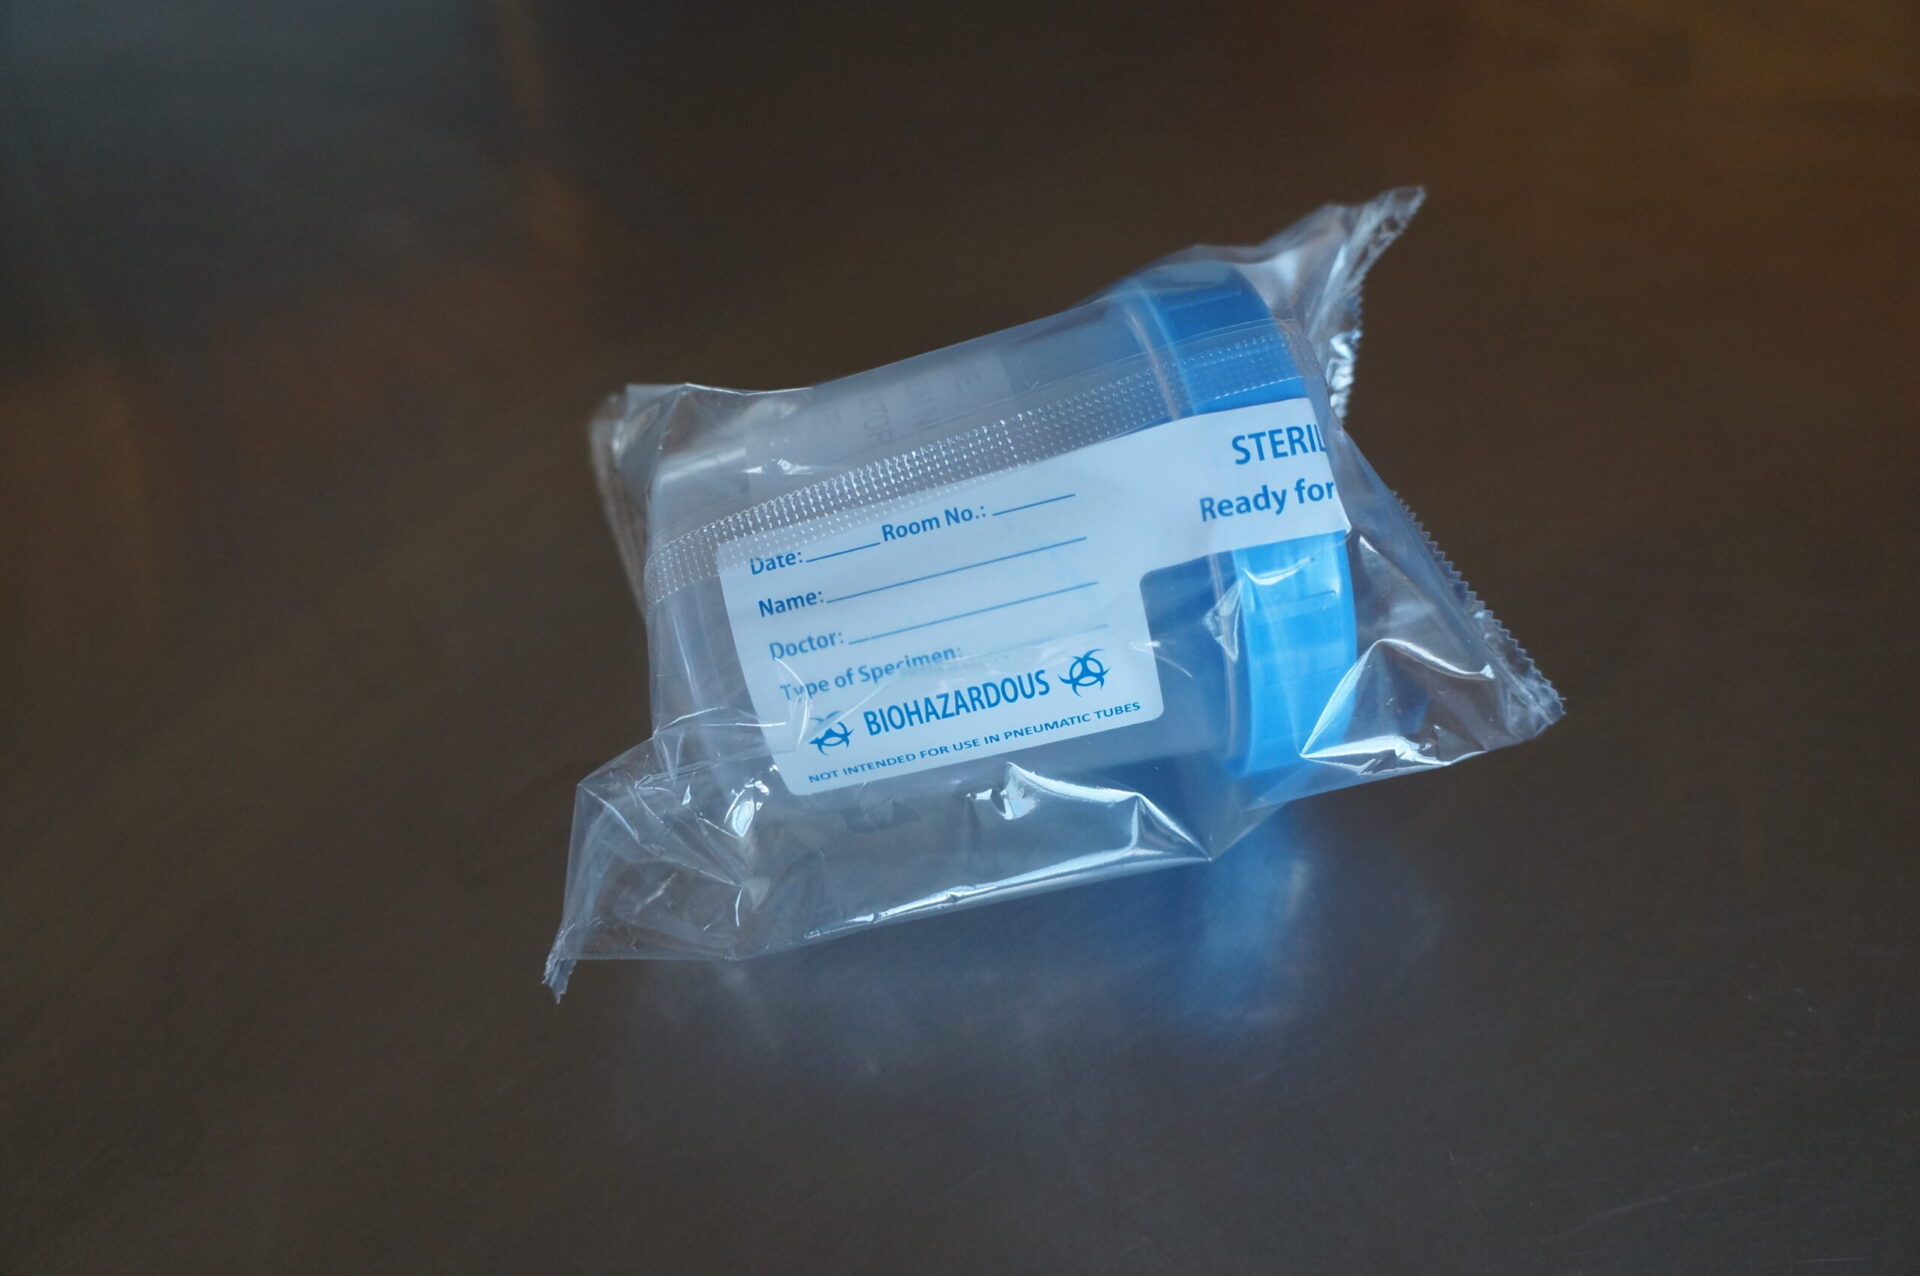 dog urine sample mistake 2 -- solution photo - sterile specimen cup